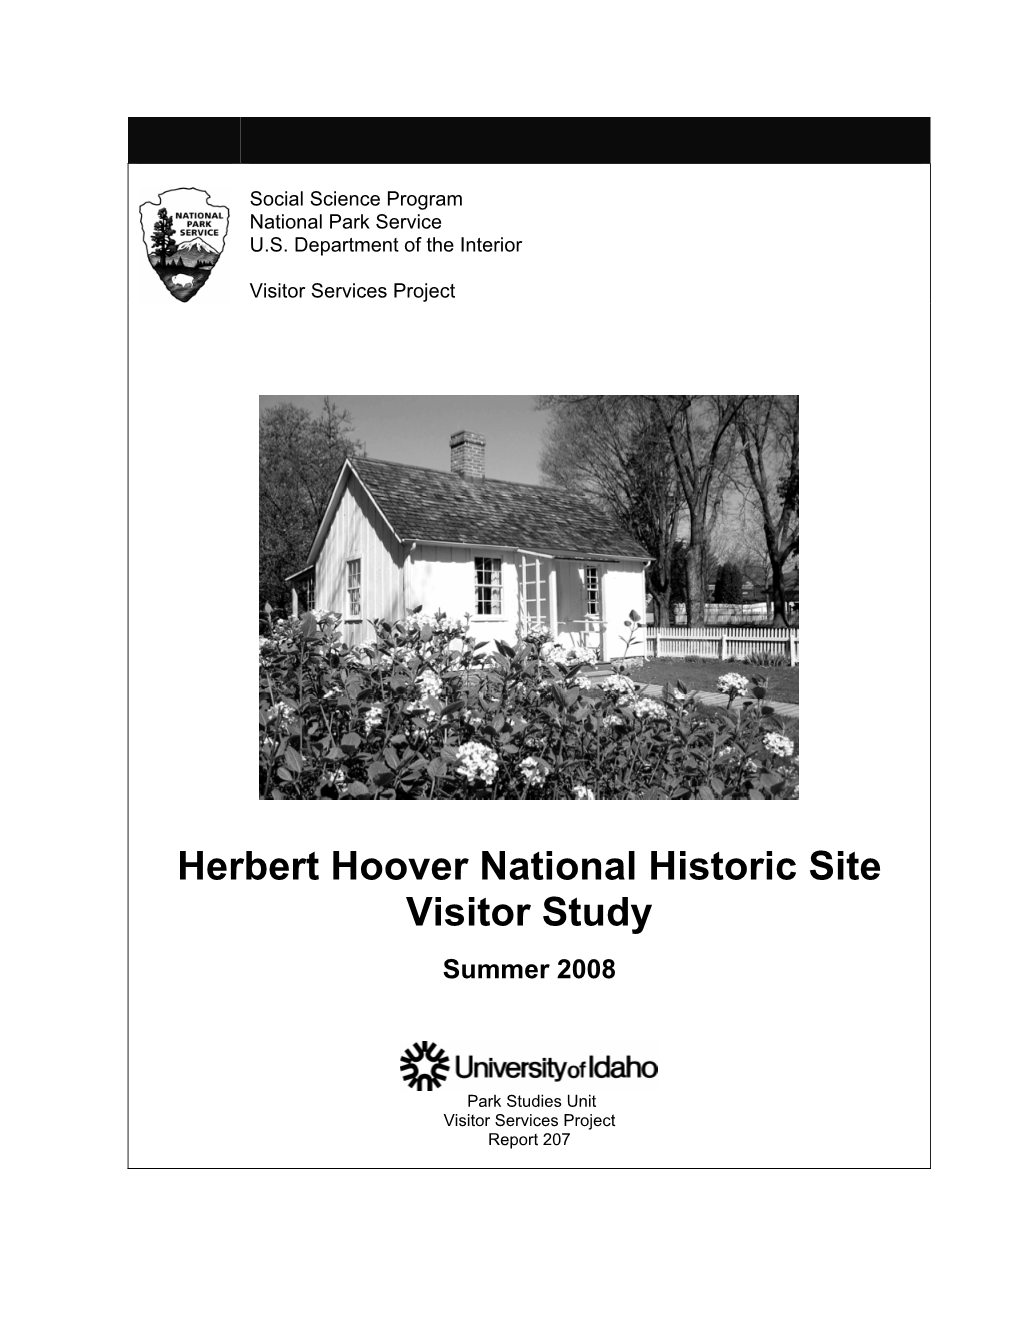 Herbert Hoover National Historic Site Visitor Study